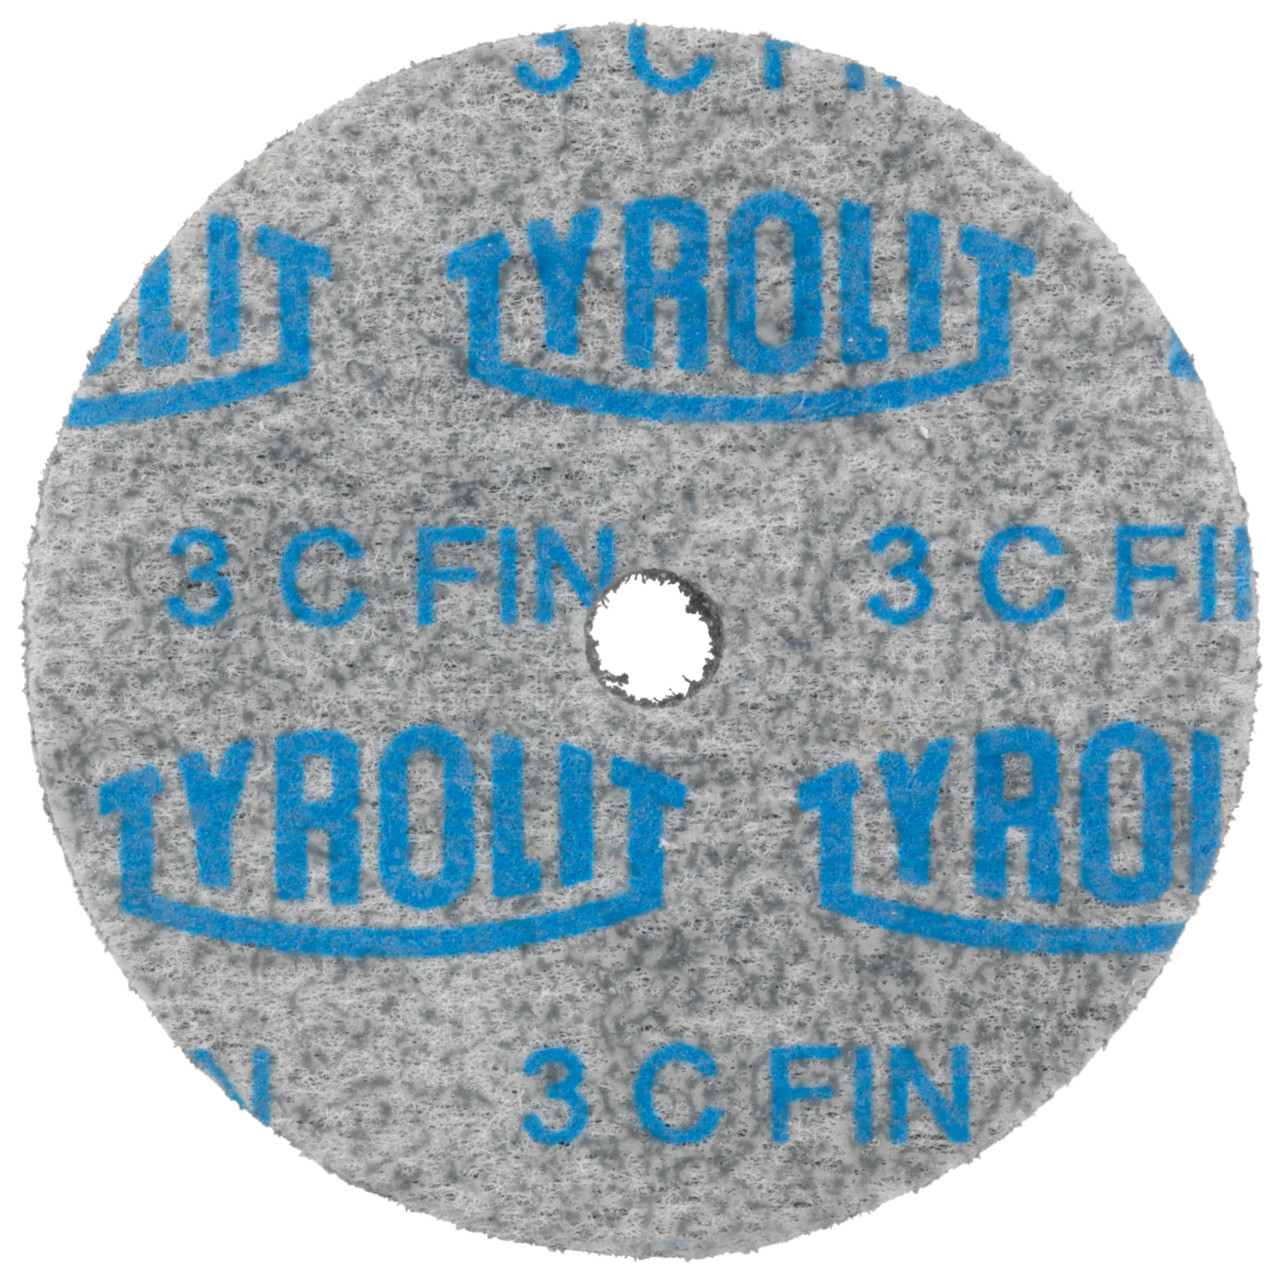 Tyrolit Discos compactos prensados DxDxH 51x6x6,3 Inserción universal, 8 A GROB, forma: 1, Art. 34189999